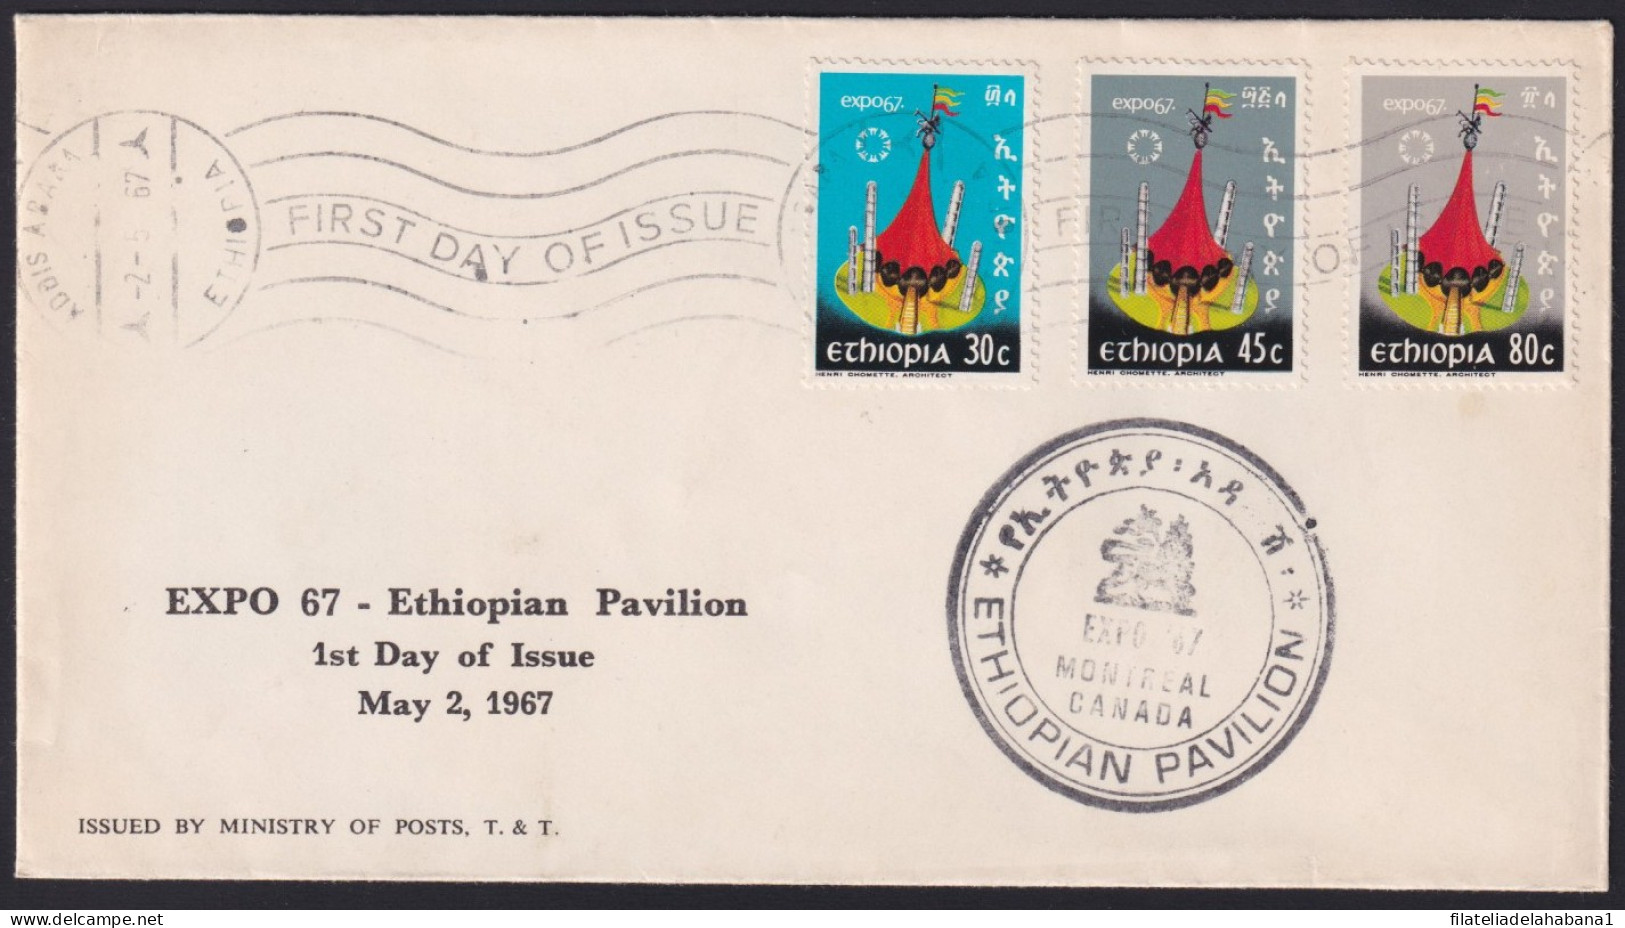 F-EX41196 ETHIOPIA ETIOPIA FDC 1970 WORLD FAIR OSAKA JAPAN NIPPON ART PAVILION. - 1970 – Osaka (Japan)